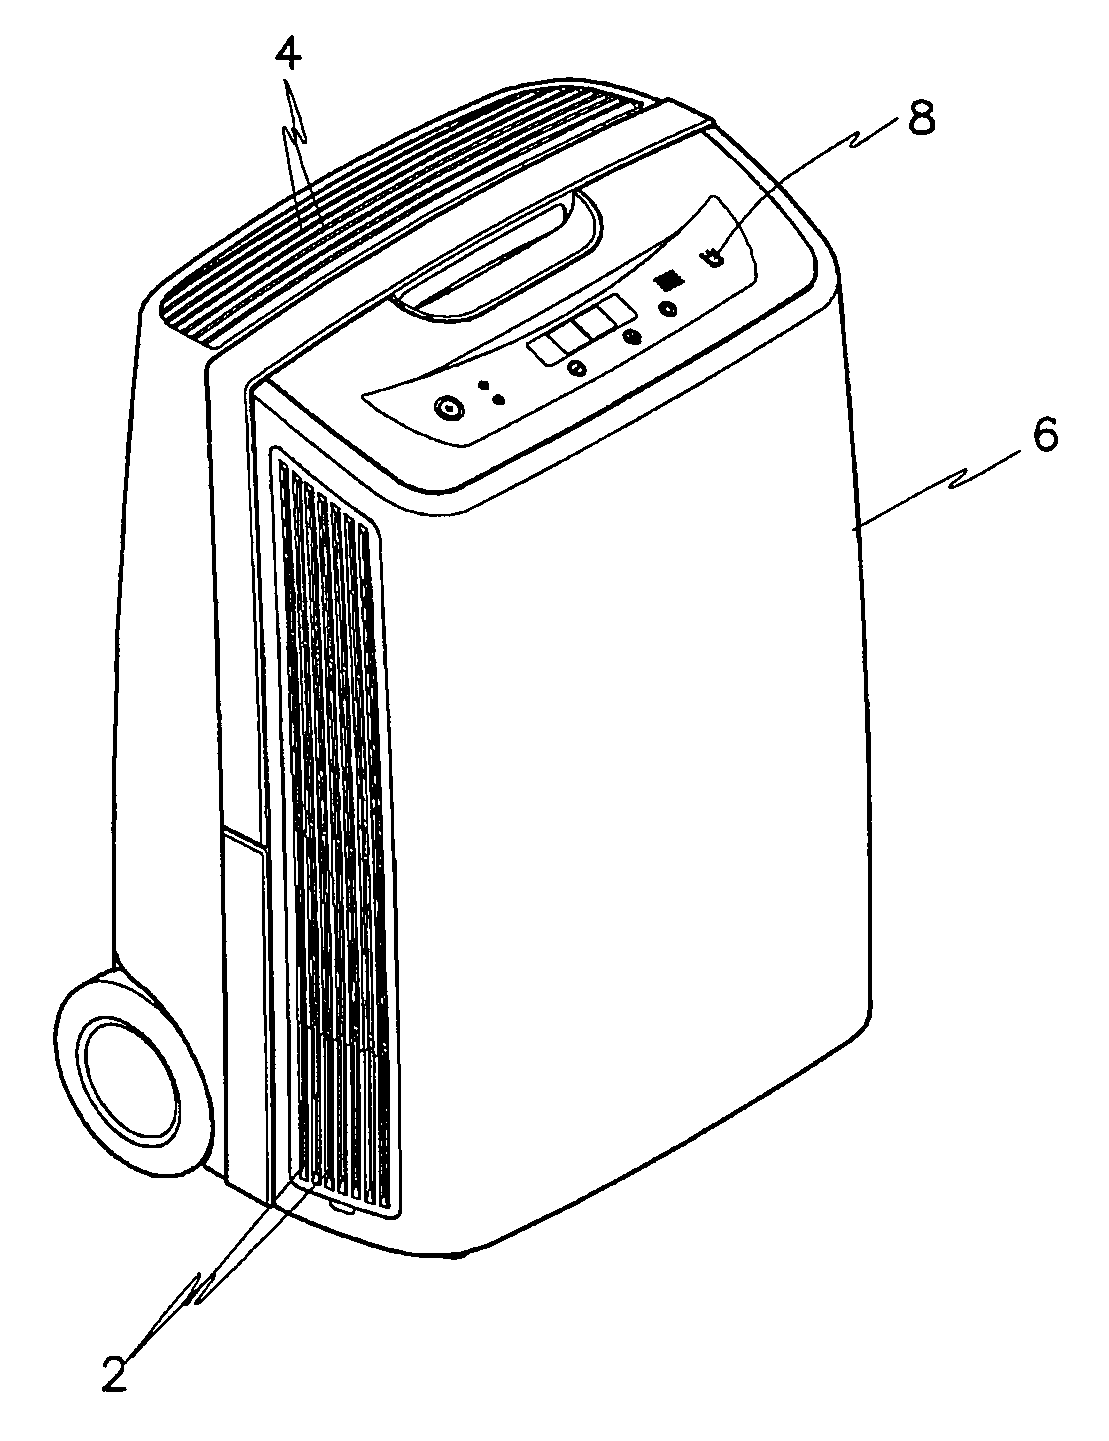 Continuous drain-type dehumidifier